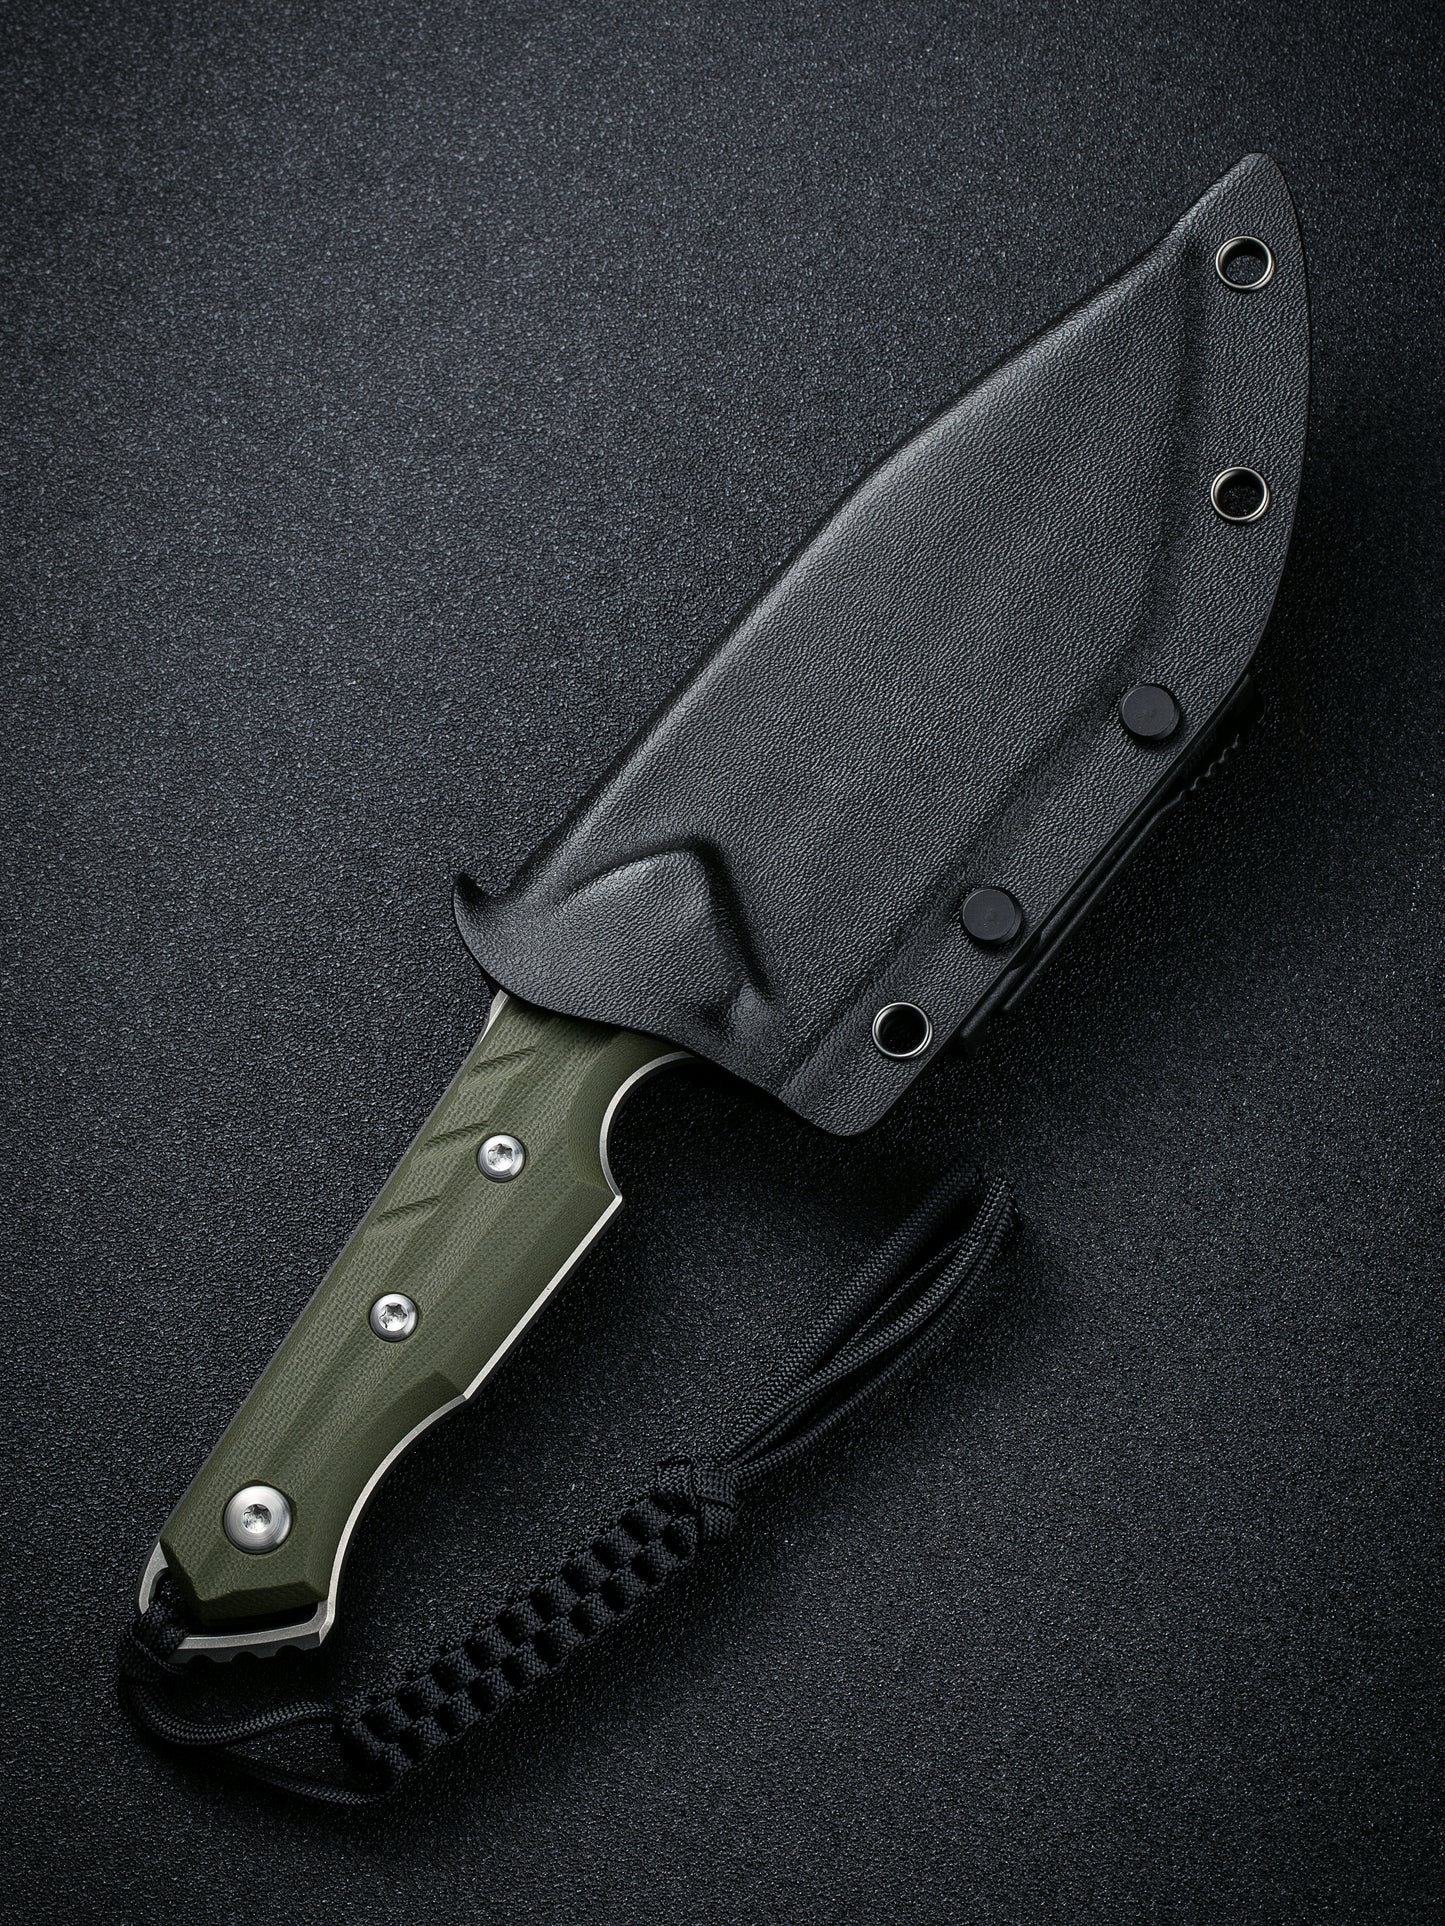 Civivi Maxwell 4.74" D2 Stonewashed OD Green G10 Fixed Blade Knife by Maciej Torbe C21040-2